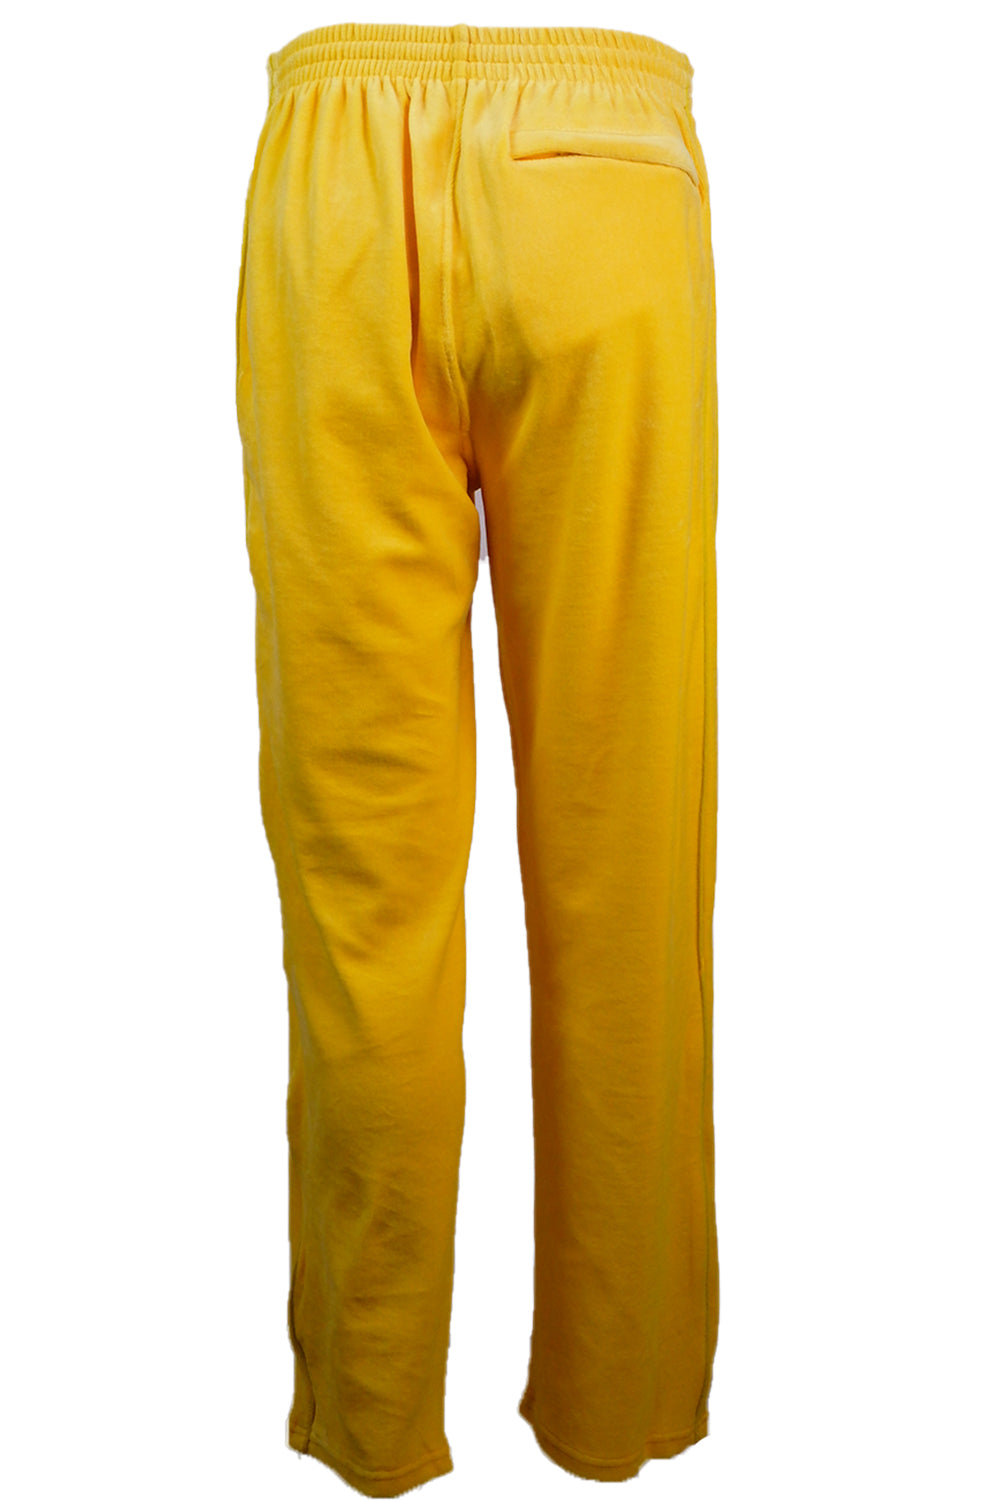 Gold Color Regular Fit Trousers For Men at Rs 1399.00 | Trousers for men,  पुरुषों की पतलून - Italian Crown, Surat | ID: 25870818391